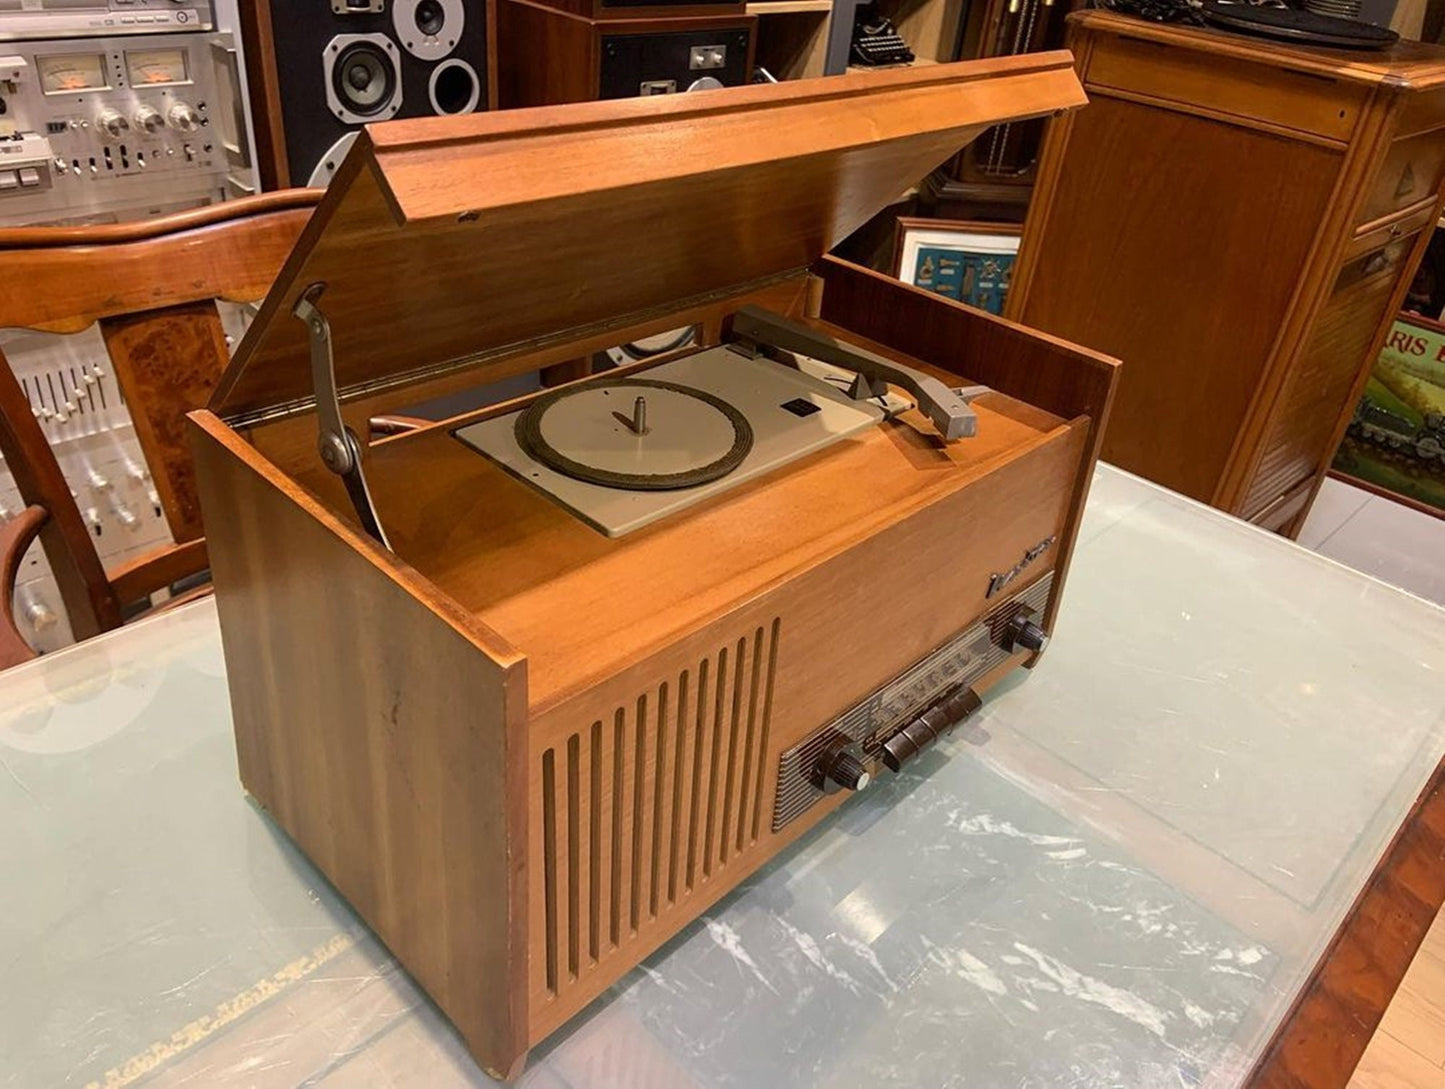 Germany Union Lamp Radio With Pikap - Vintage Audio Elegance - For Sale